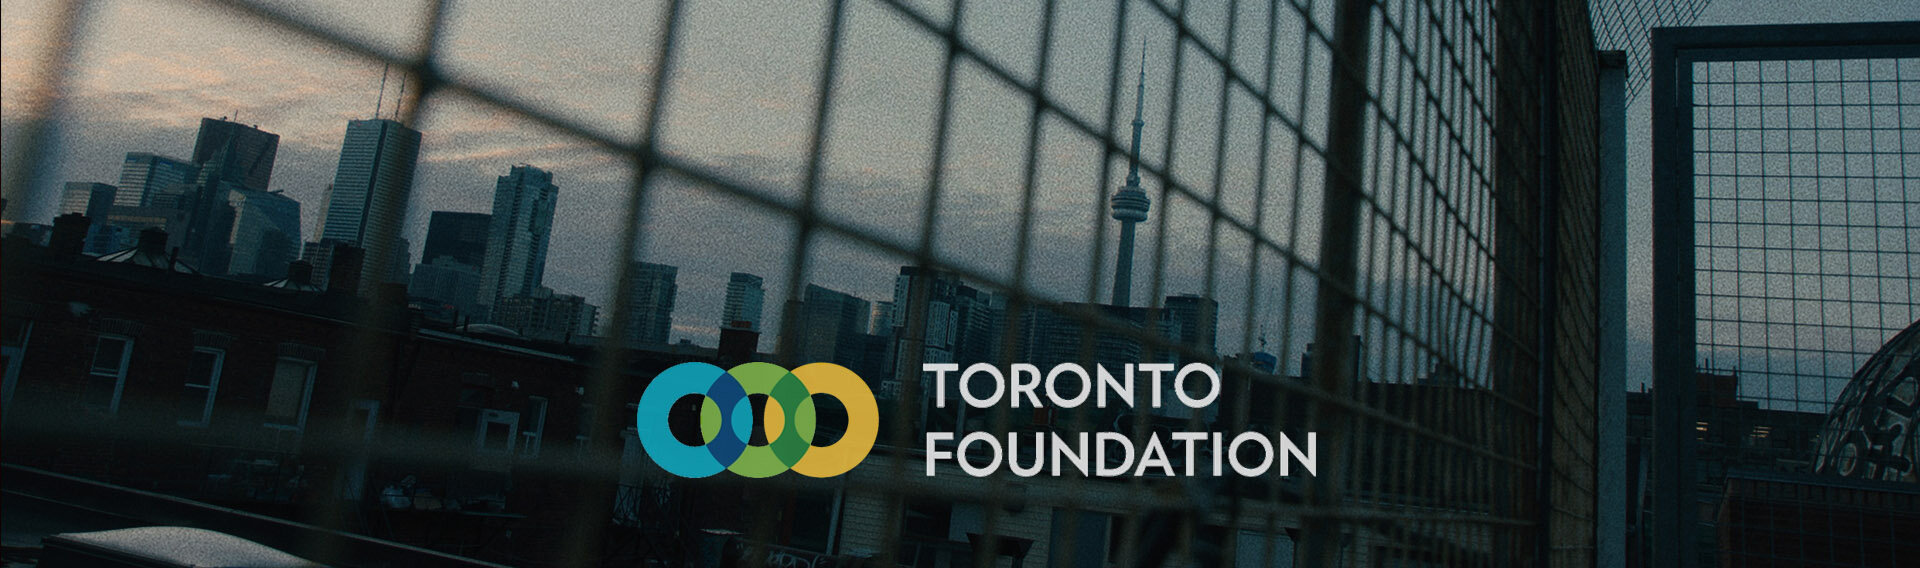 Toronto Foundation.jpg